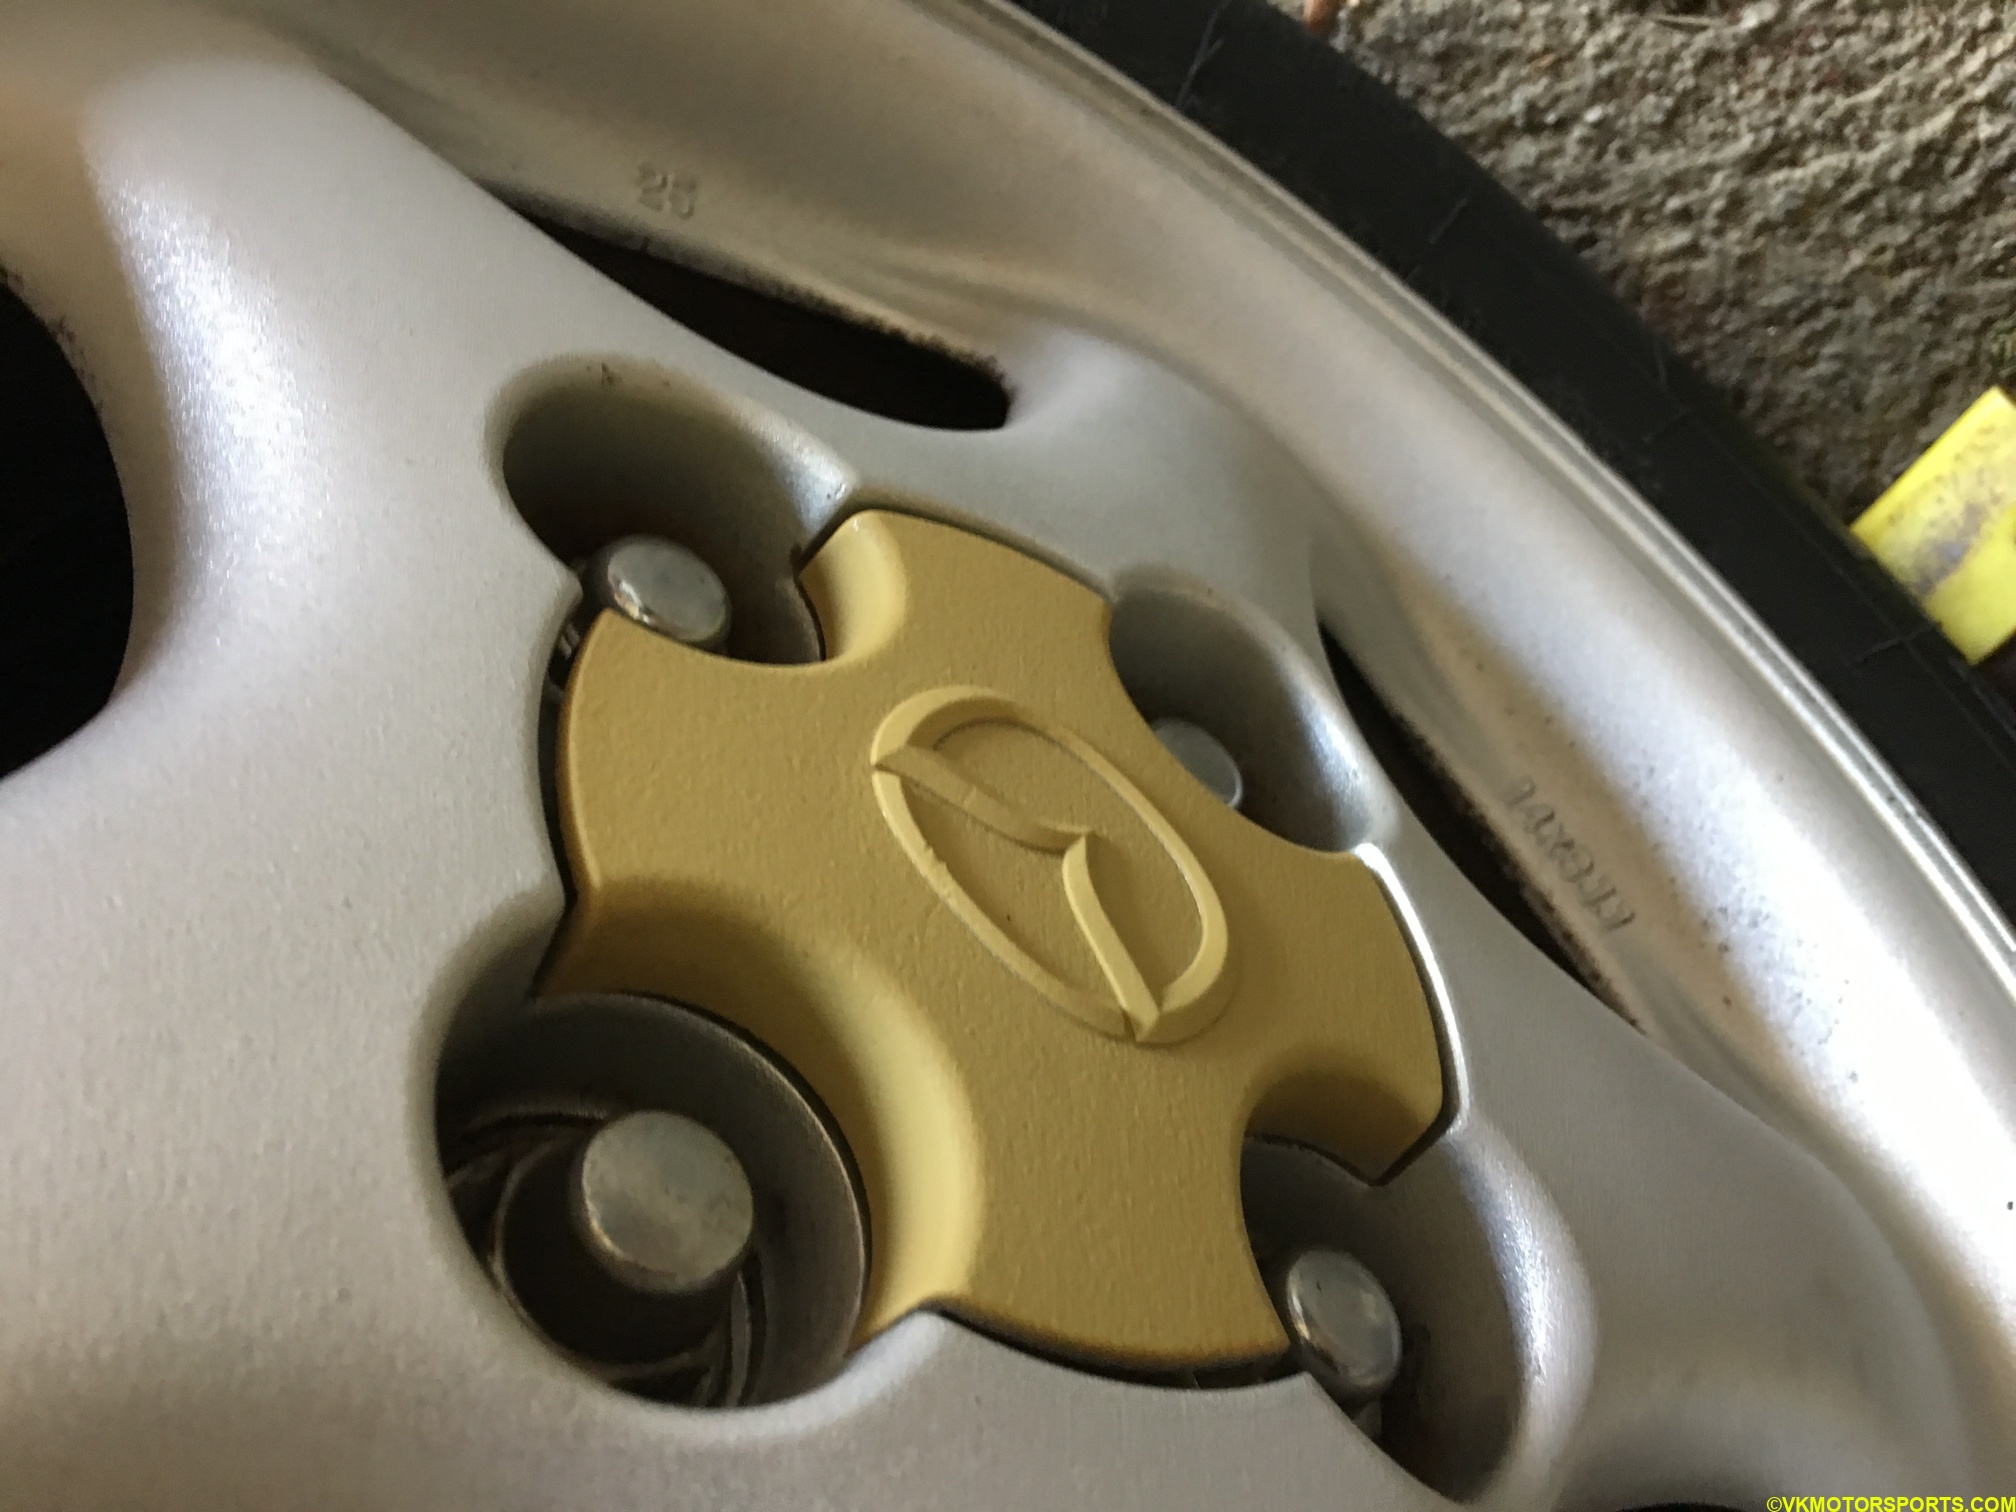 Figure 1. Wheel hub-cap